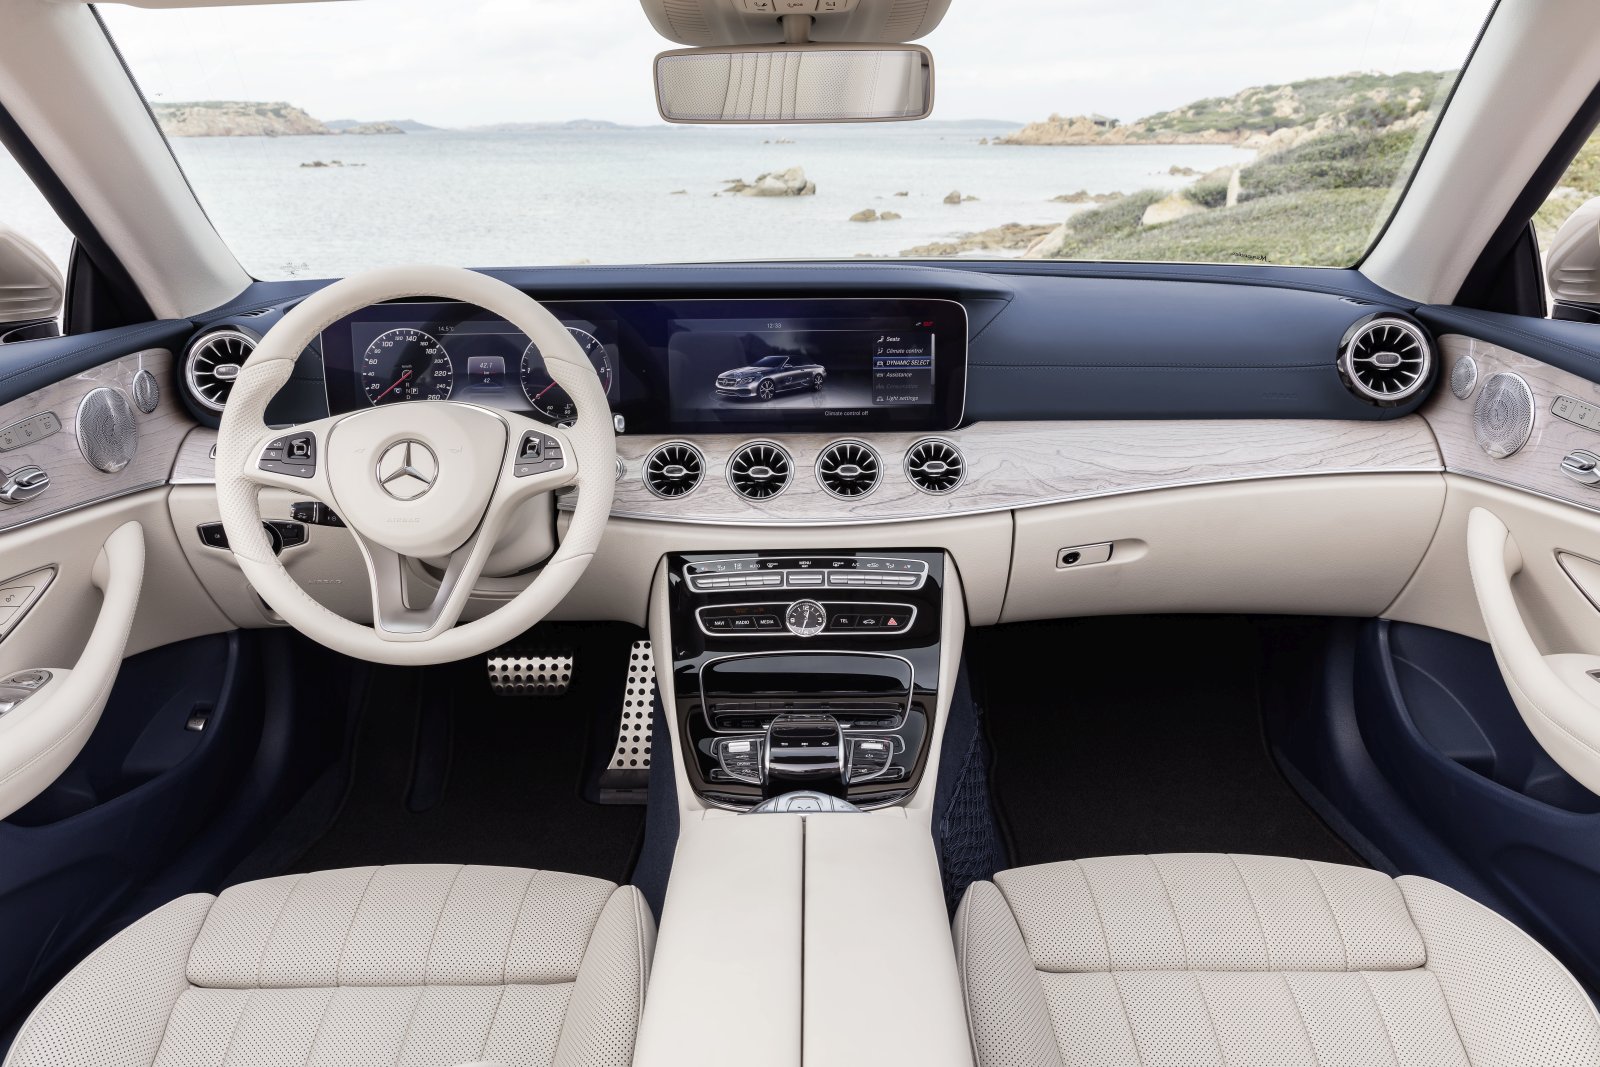 Neue schon gefahren: Mercedes E-Klasse Cabriolet - ALLES AUTO